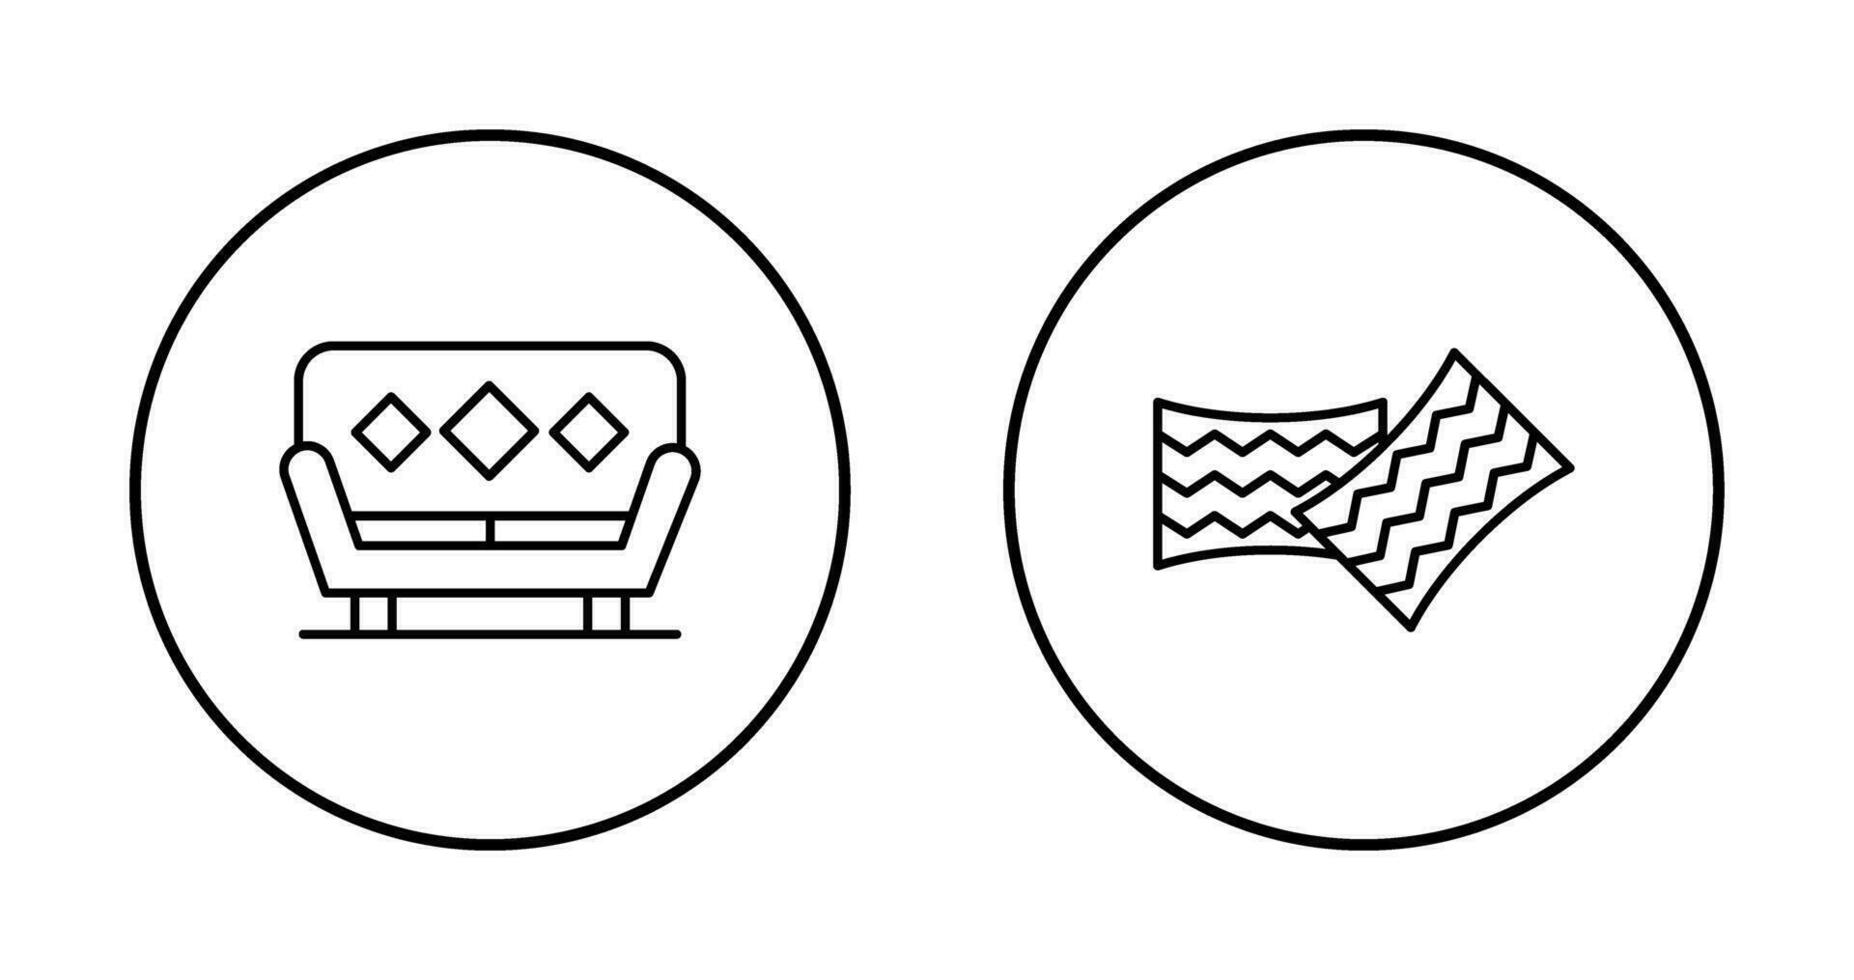 Sofa und Kissen Symbol vektor